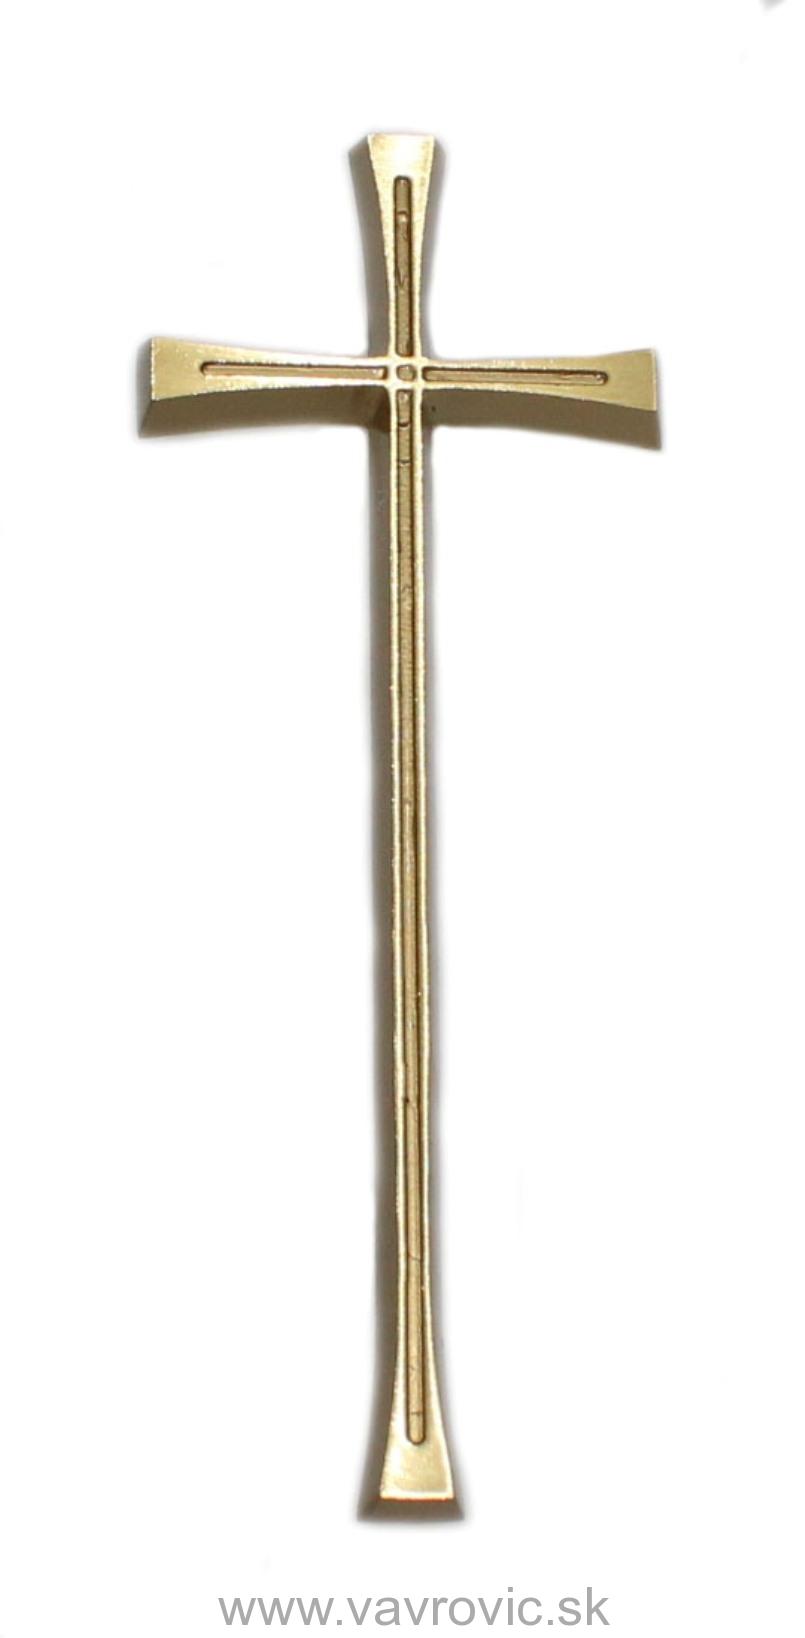 Krížik 1.B - zlatý - výška 20 cm